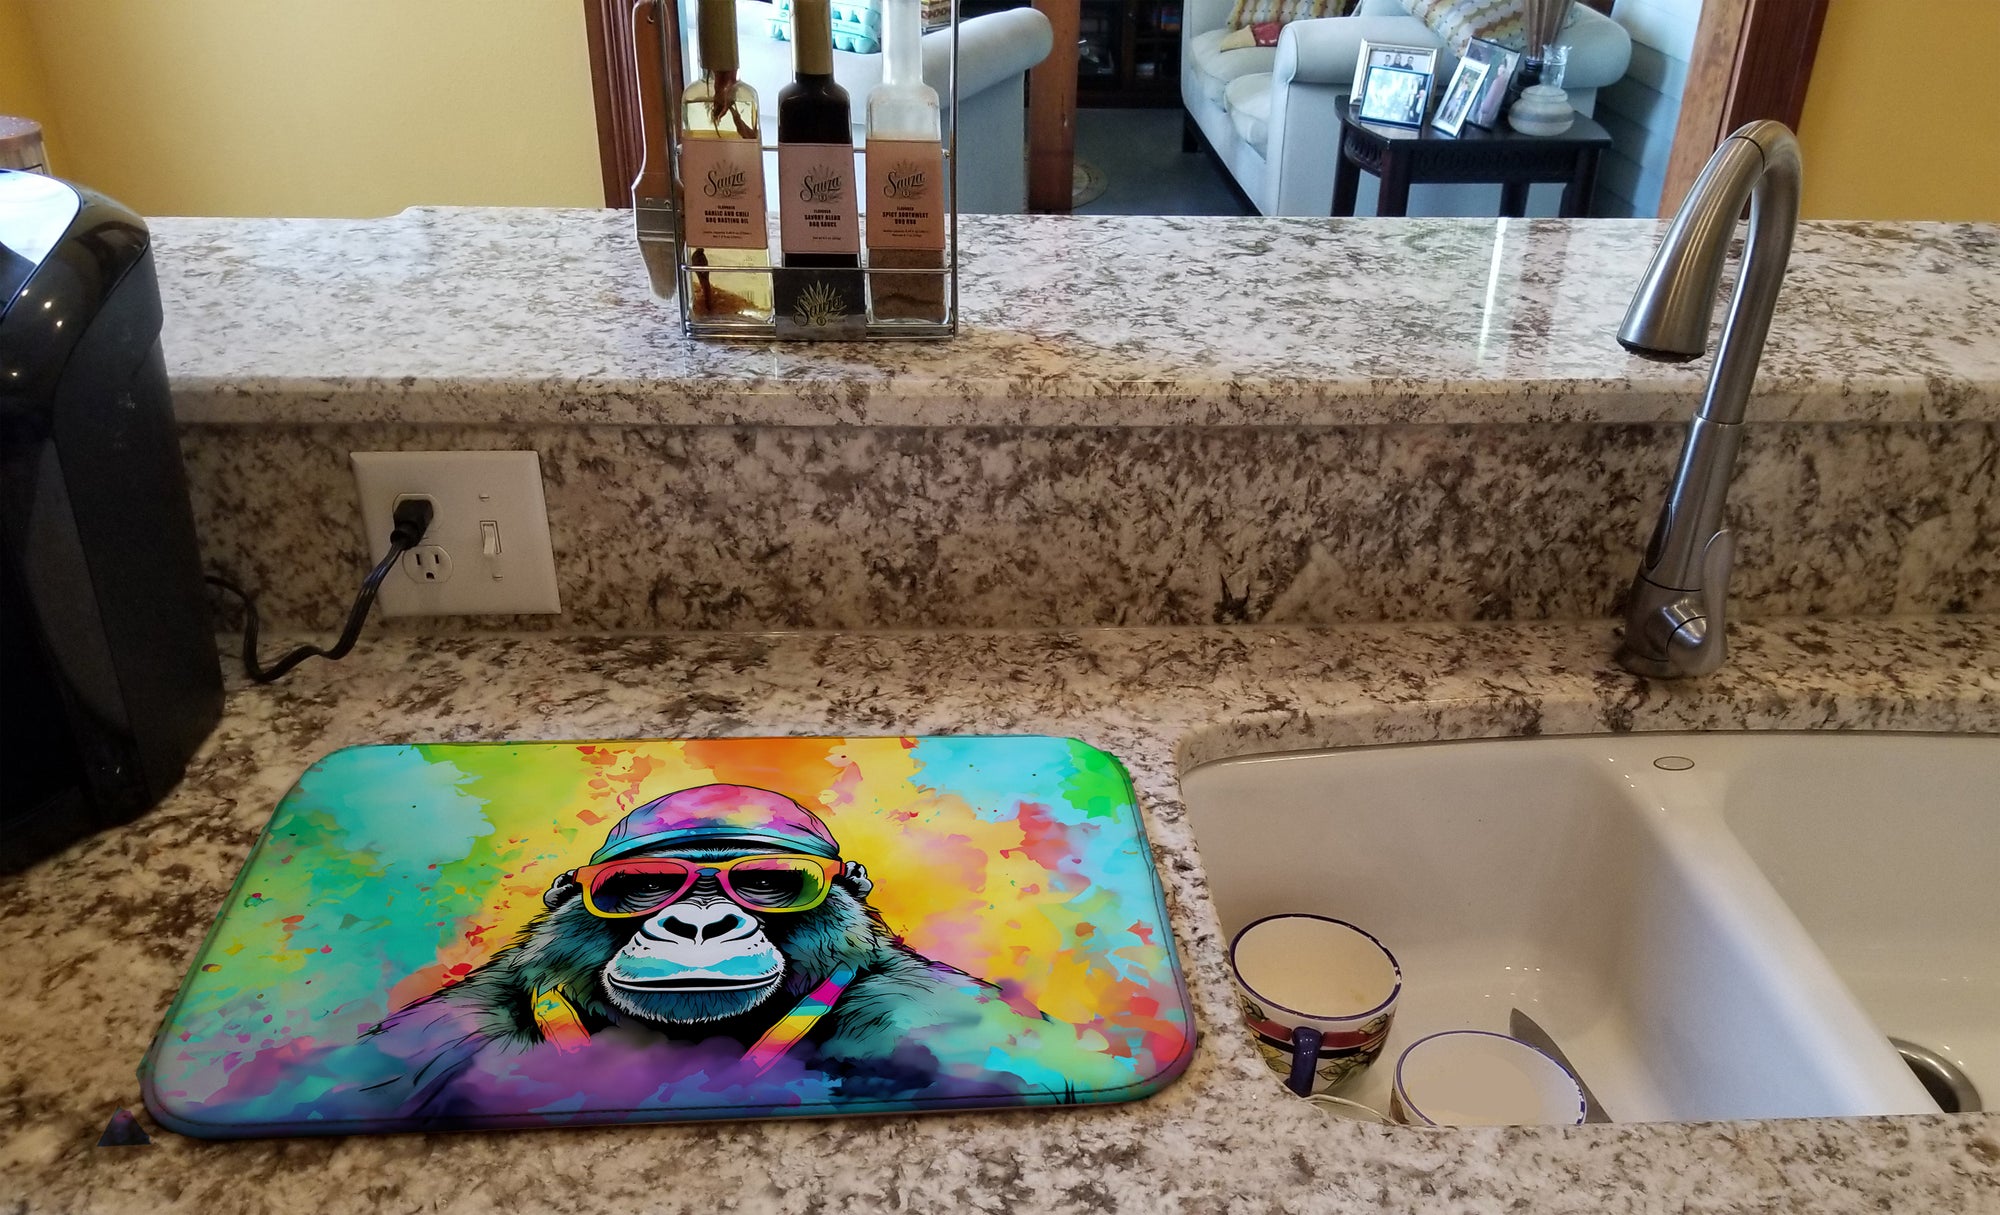 Buy this Hippie Animal Gorilla Dish Drying Mat